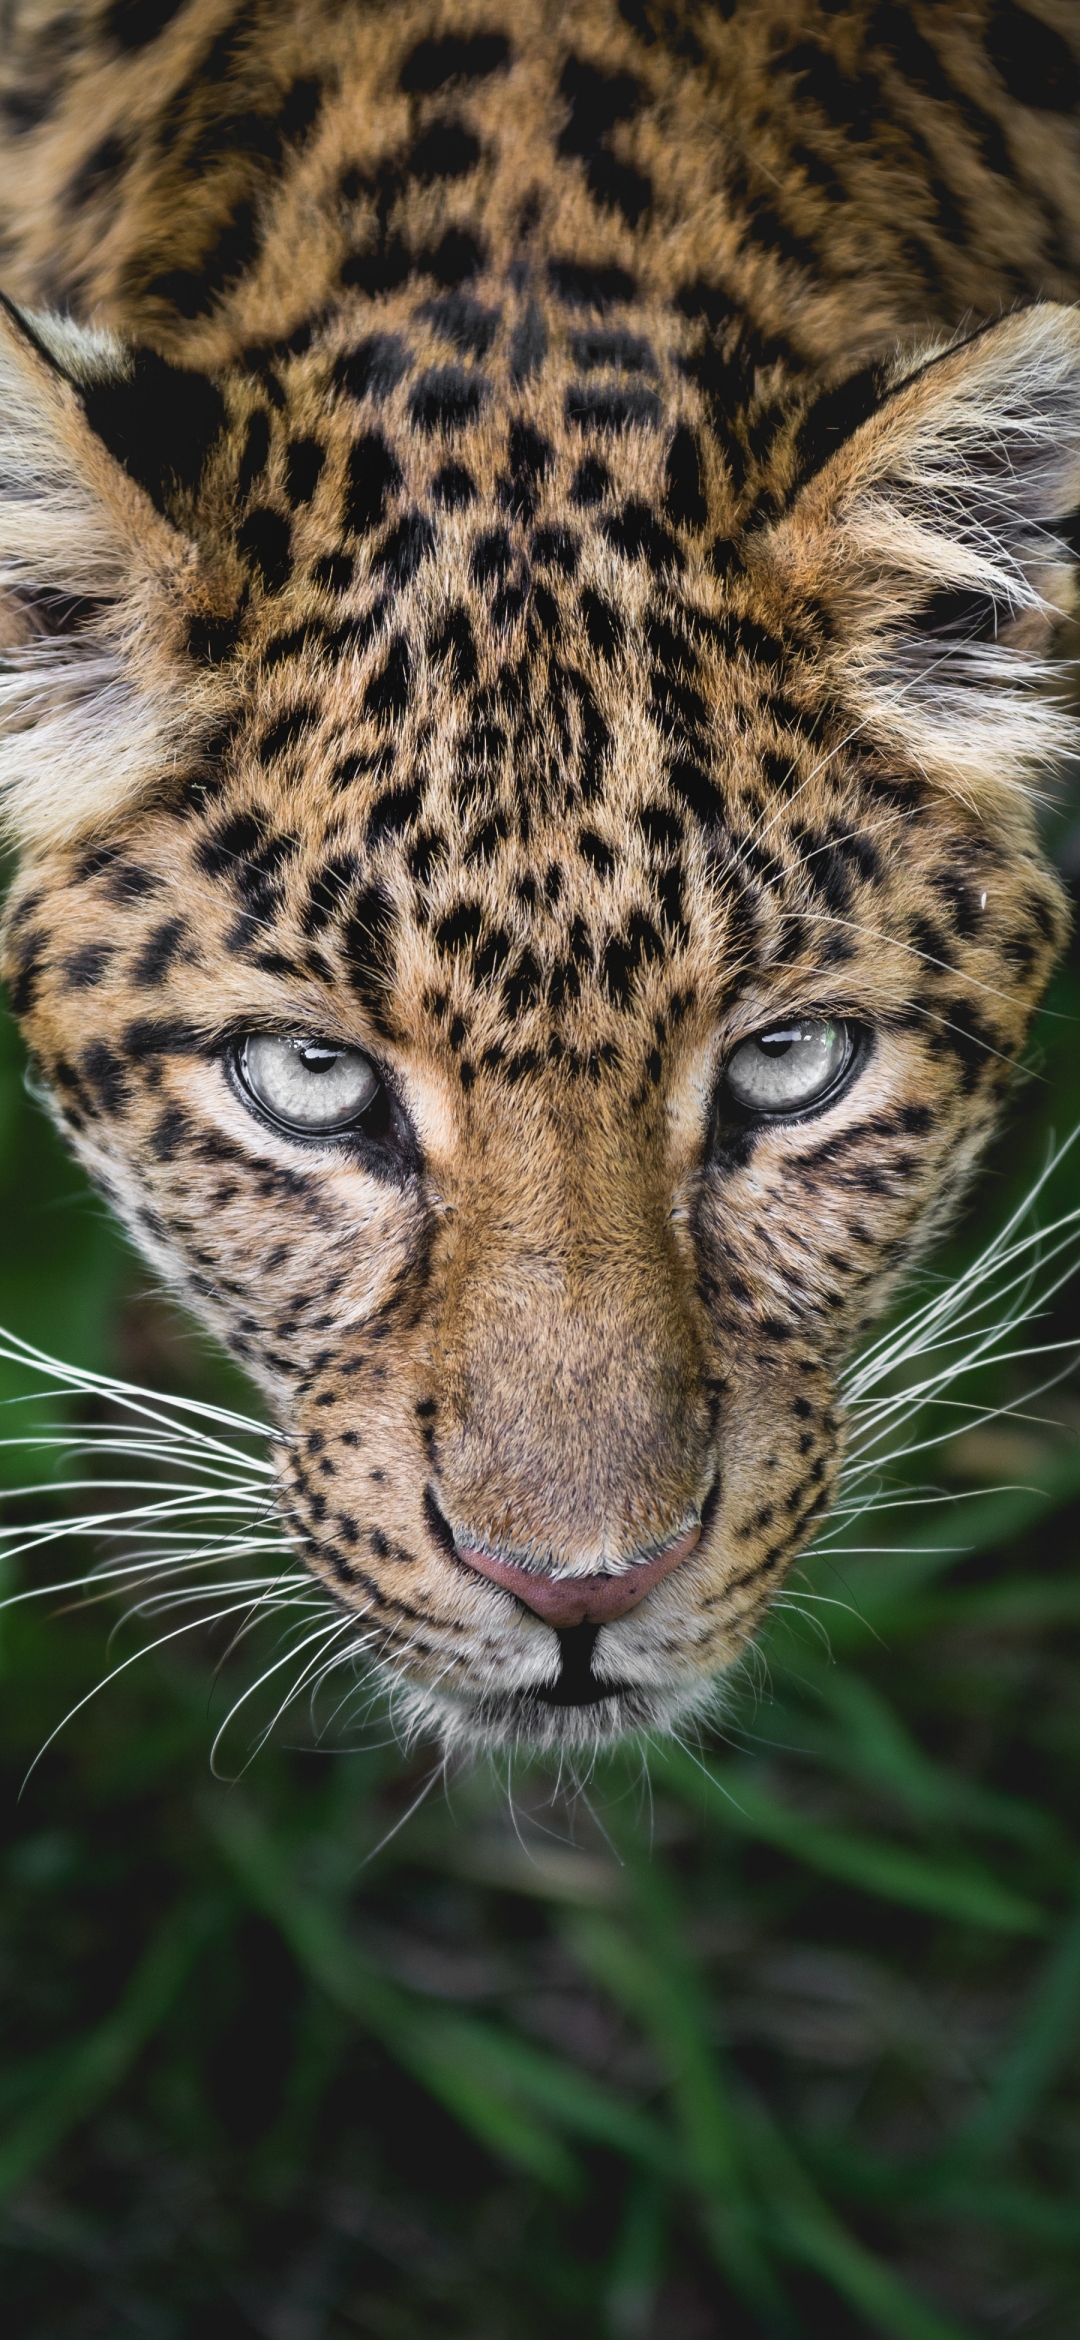 Descarga gratuita de fondo de pantalla para móvil de Animales, Gatos, Leopardo, Cara, Mirar Fijamente.